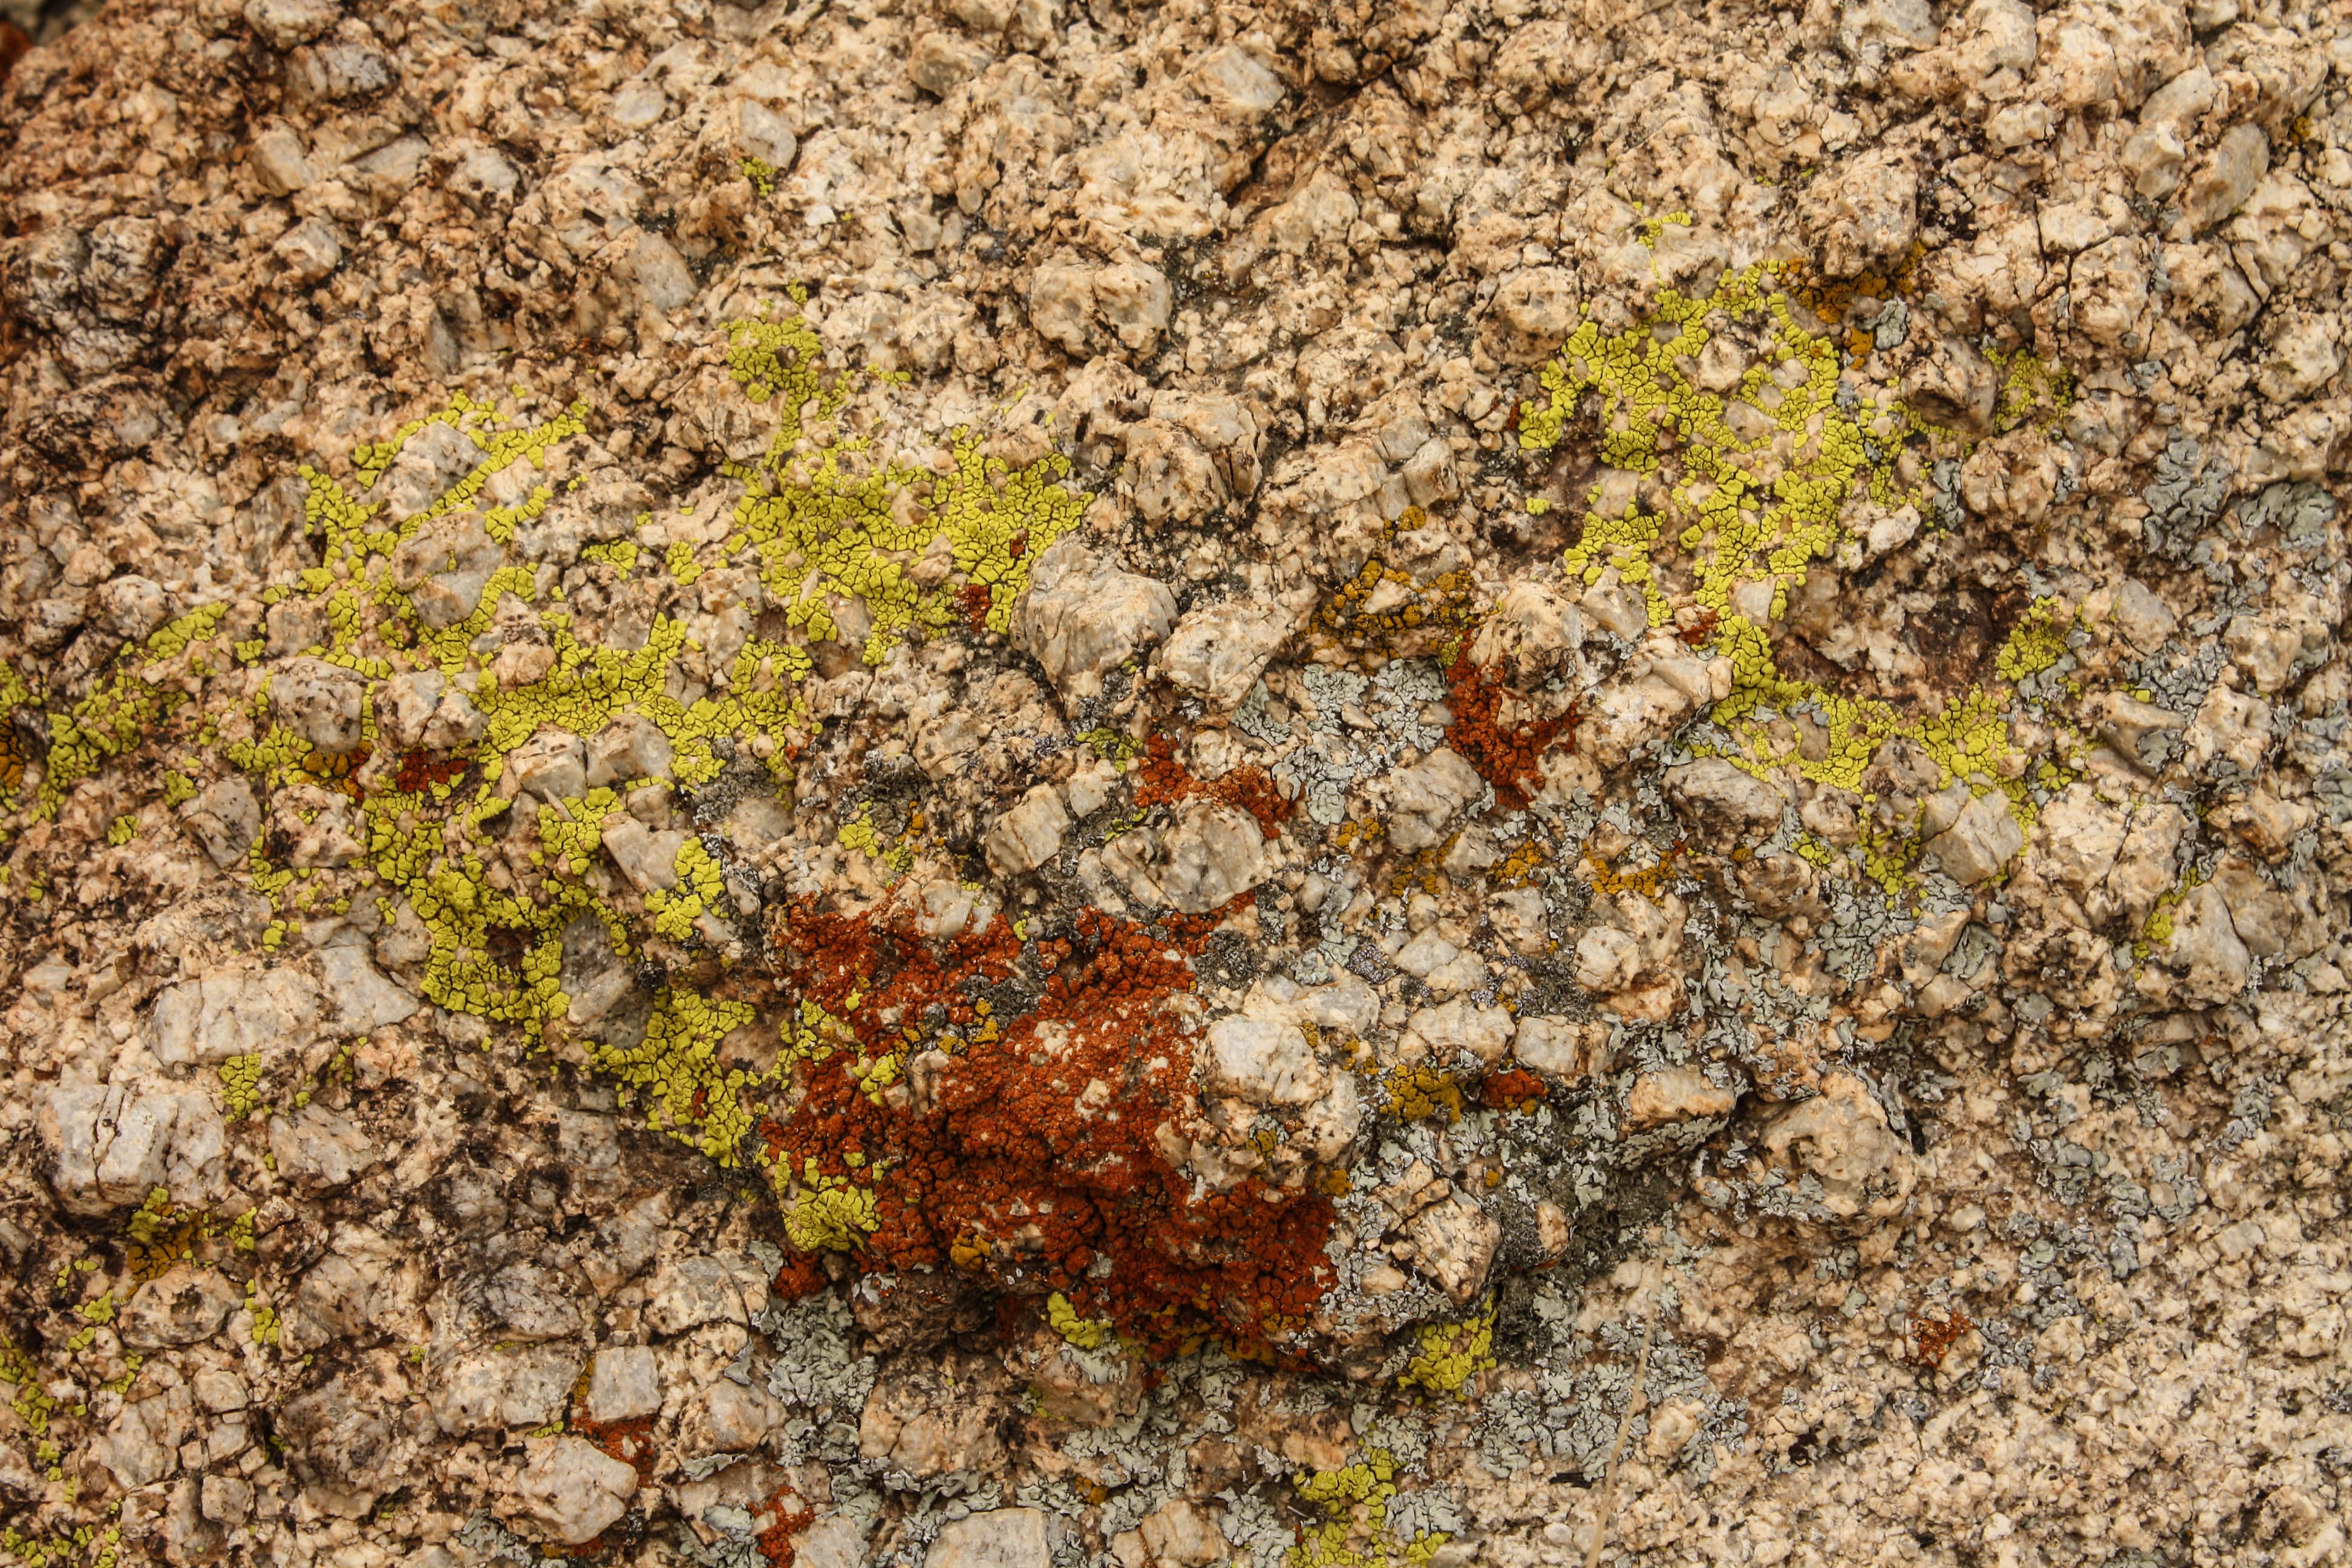 Lichens in Joshua Tree National Park